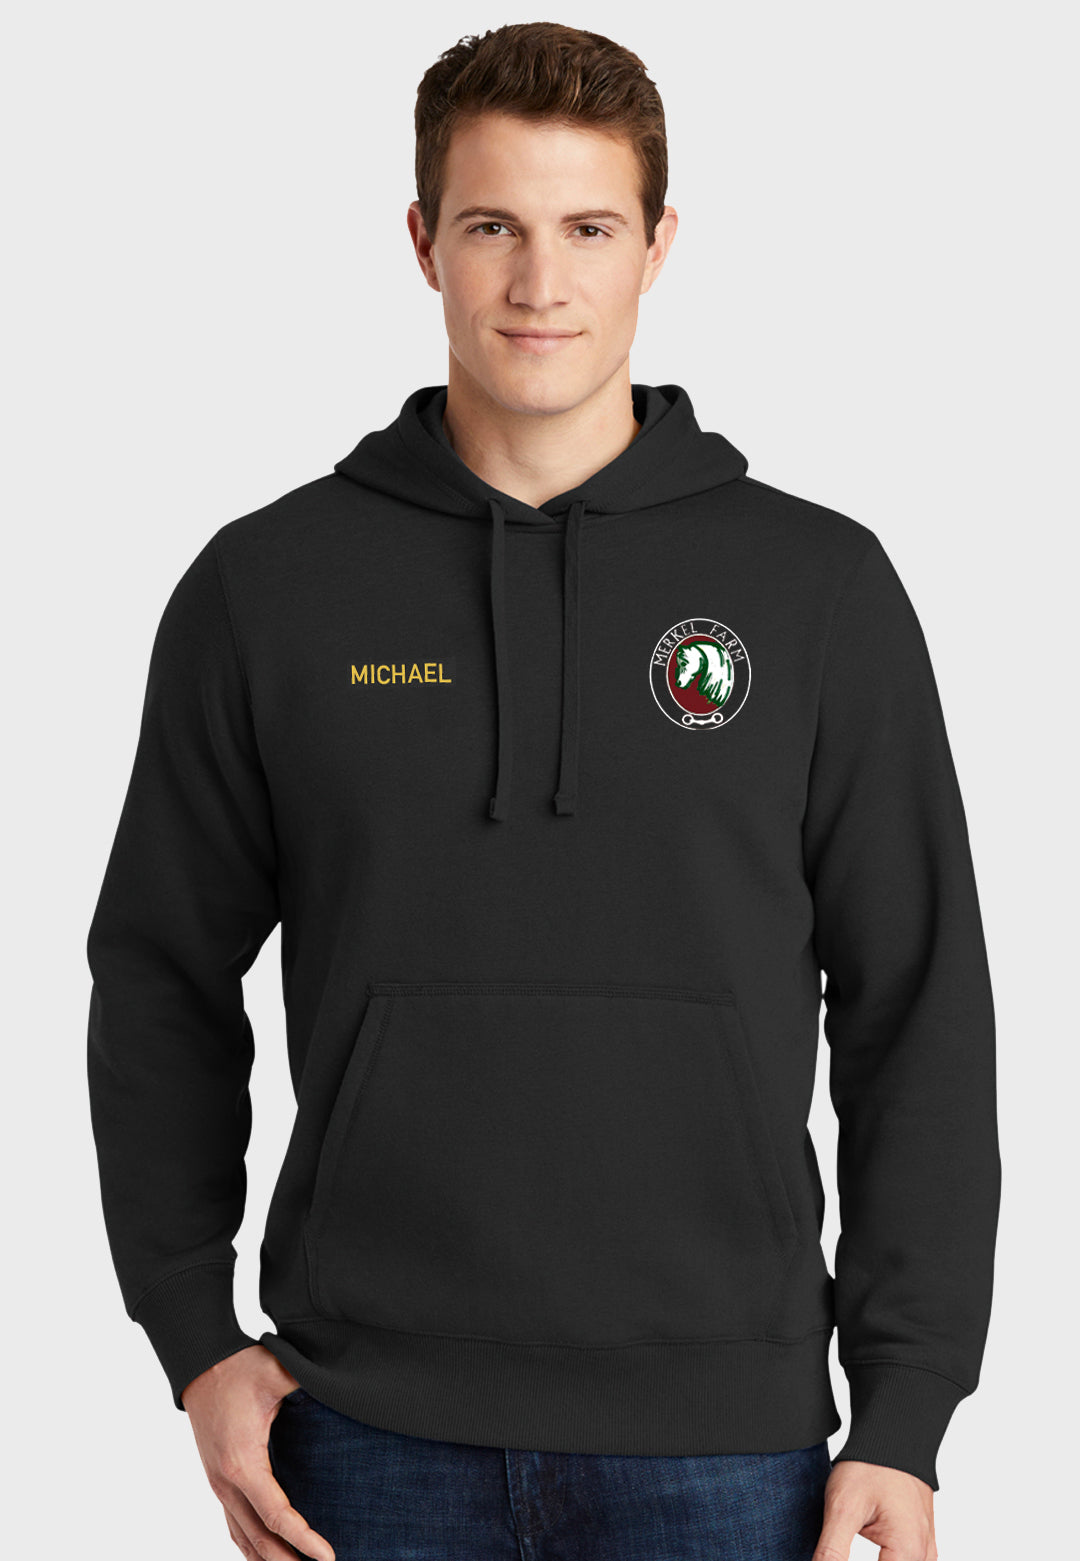 Merkel Farm Equestrian Center Sport-Tek®  Mens Hooded Sweatshirt - Black